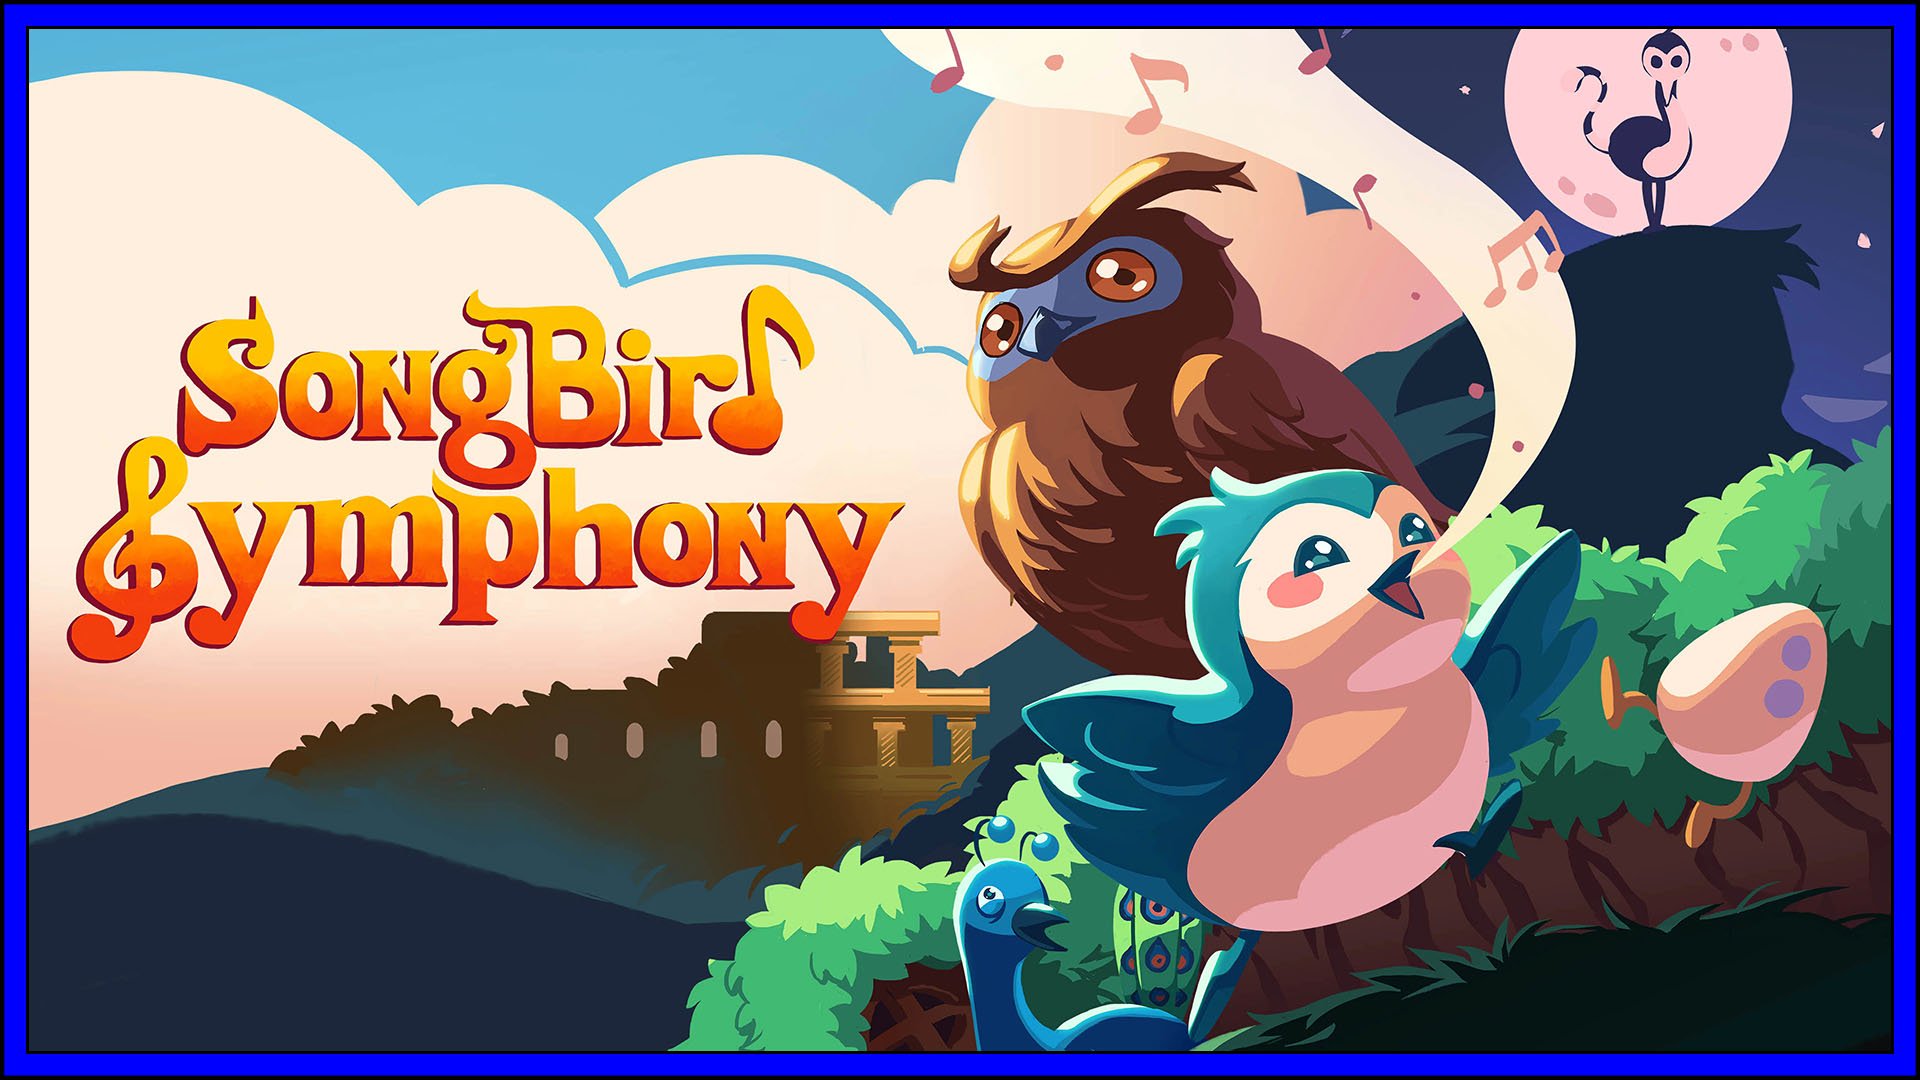 Songbird Symphony Fi3